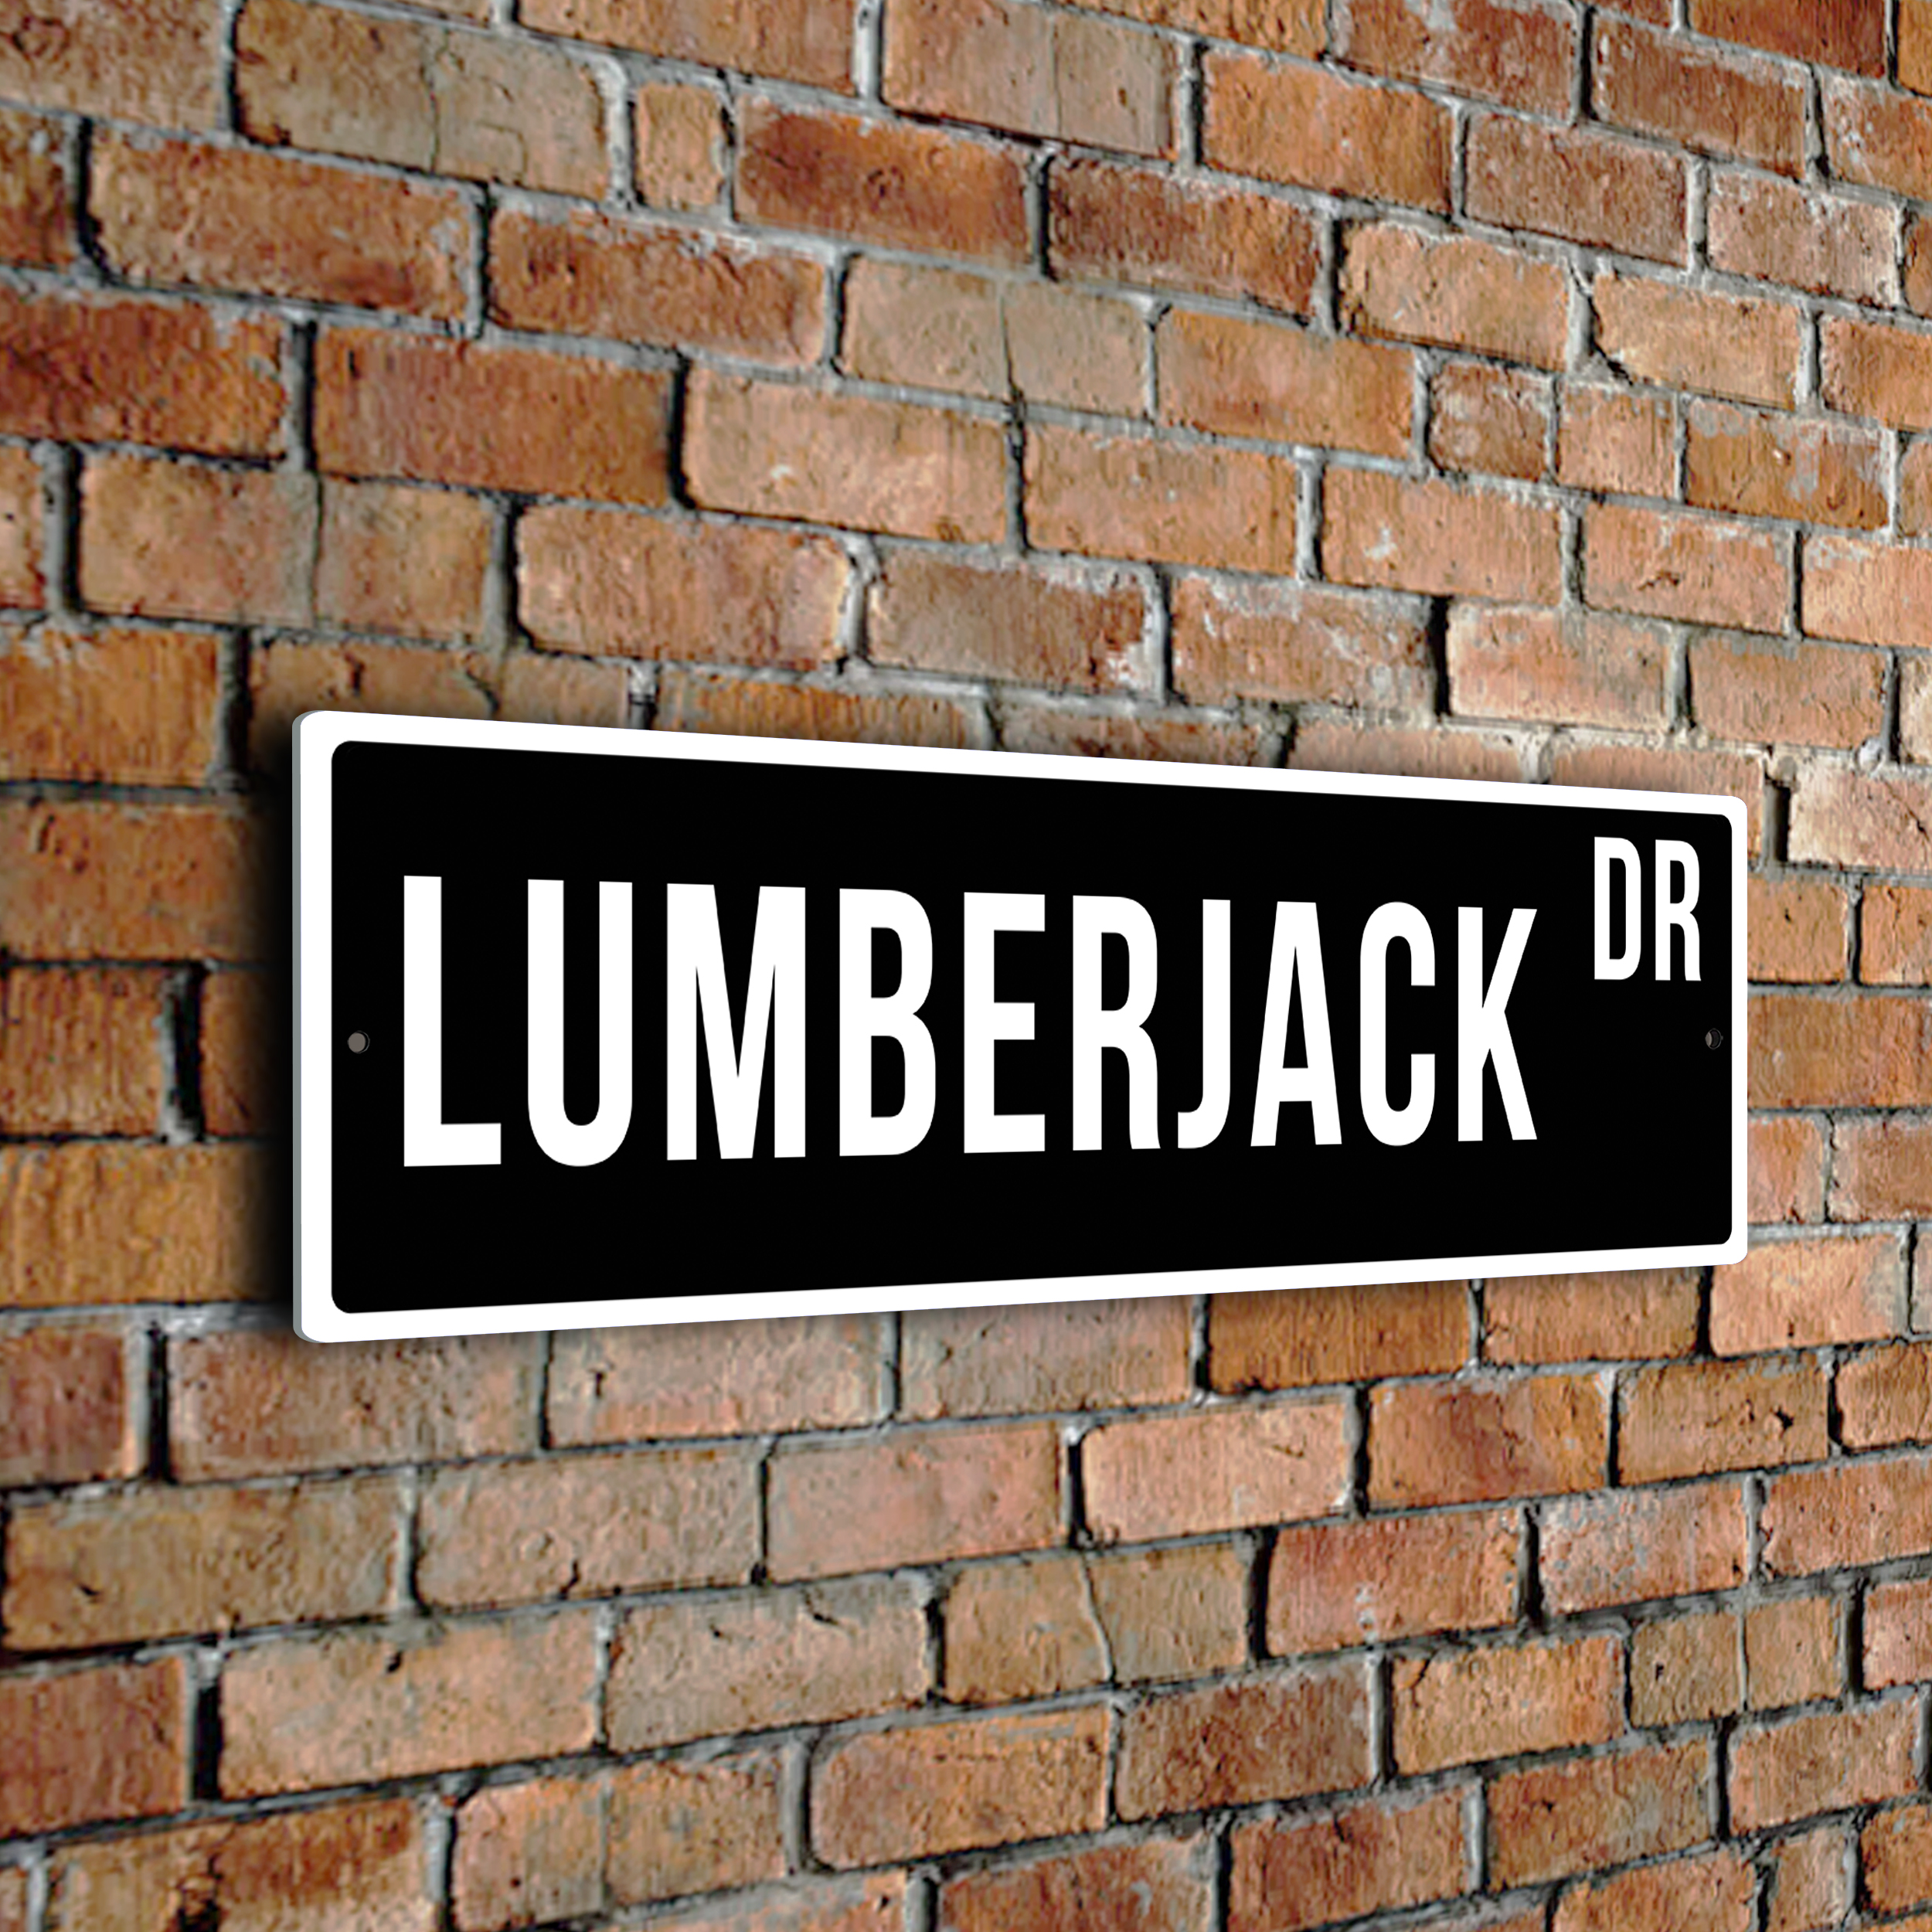 Lumberjack street sign